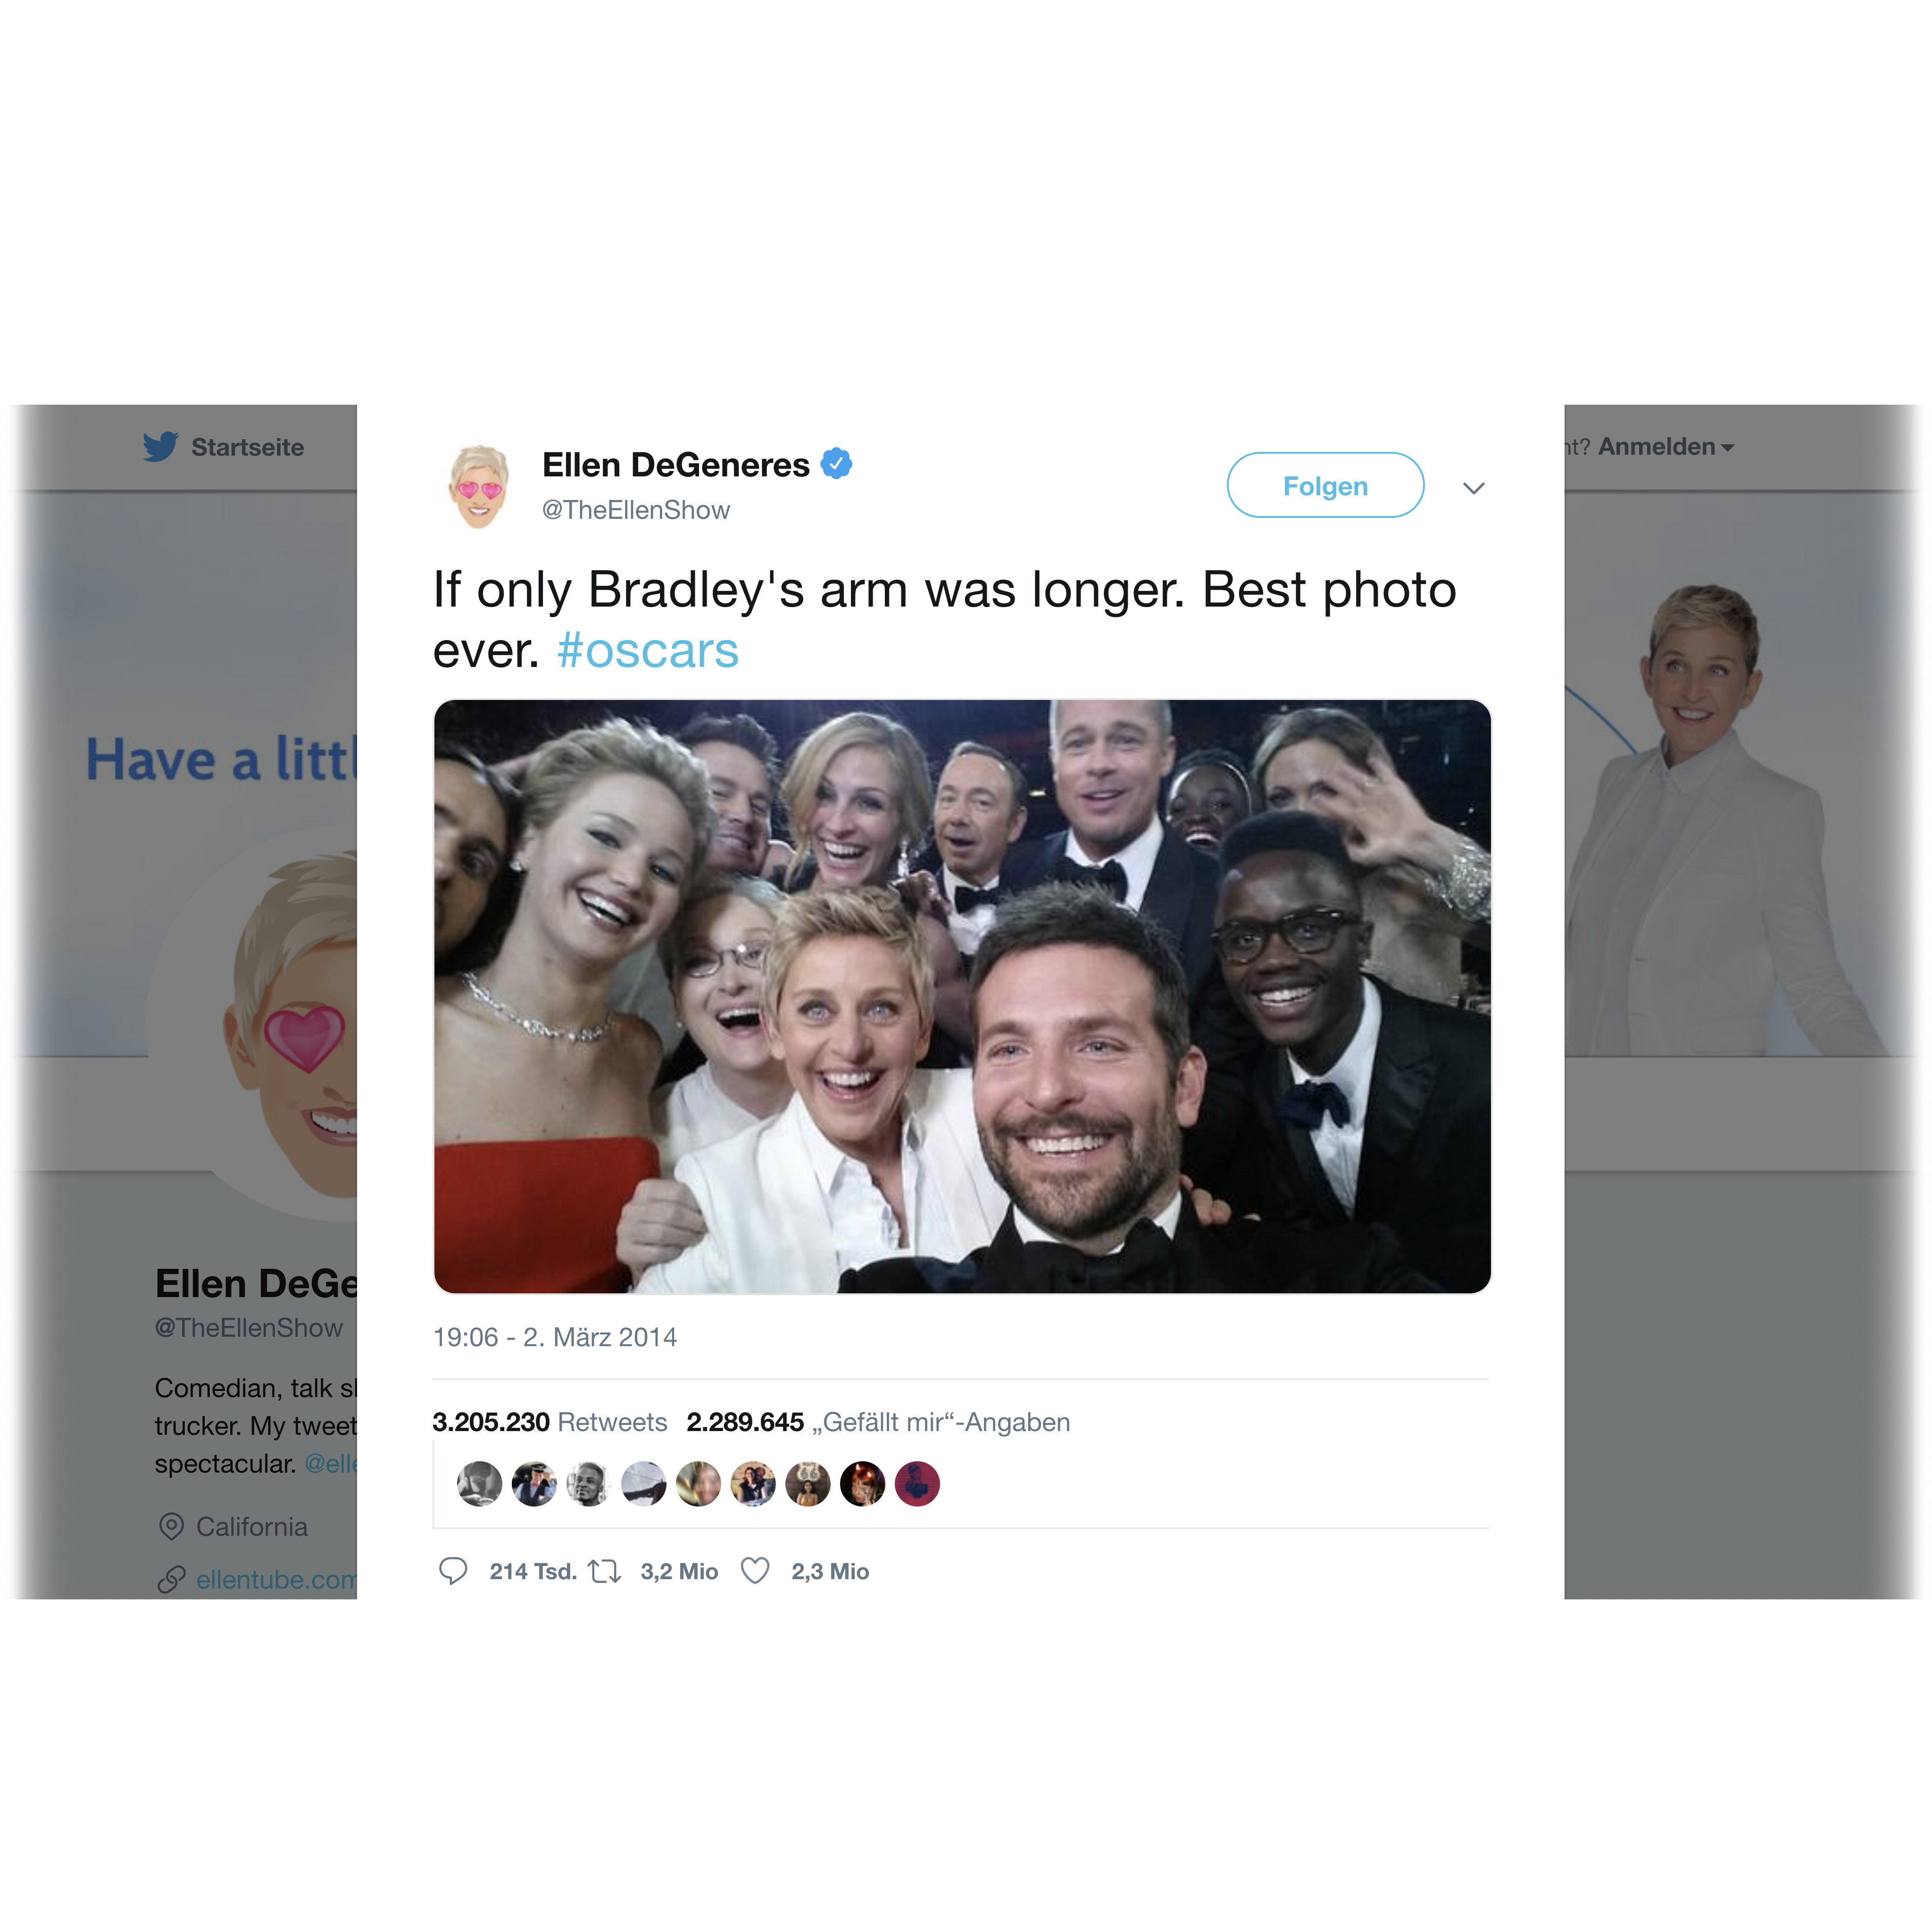 MIPTV: Ellen DeGeneres' Oscar Selfie Worth as Much as $1 Billion